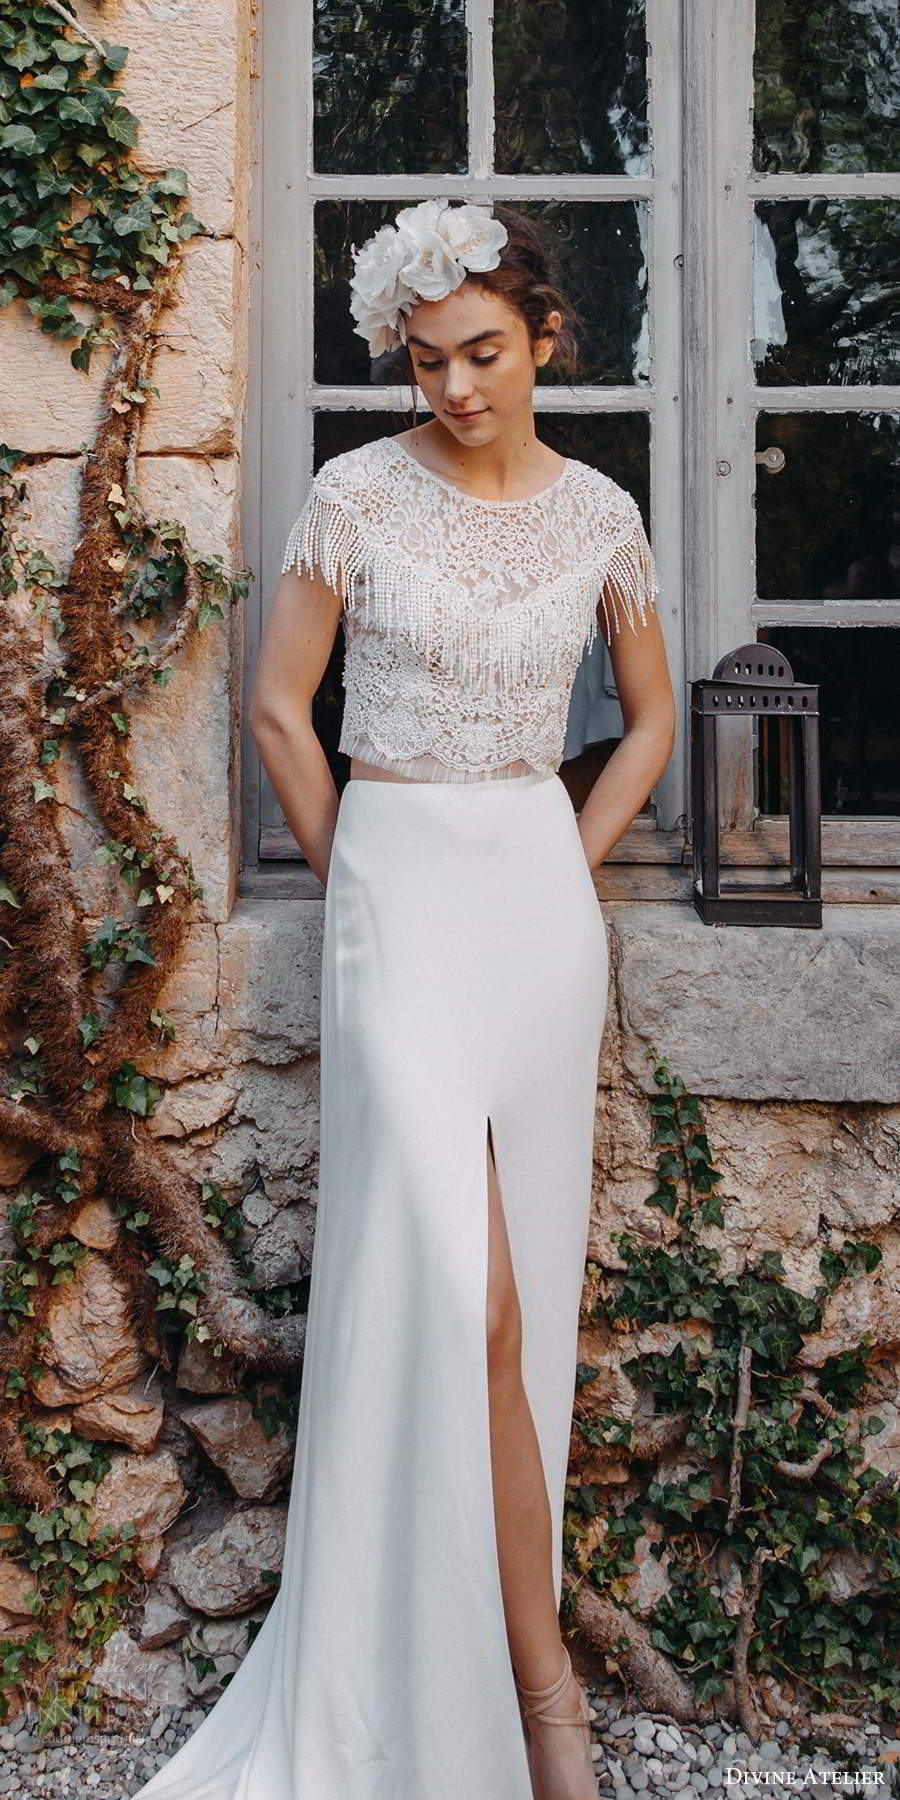 divine atelier 2020 bridal cap sleeves jewel neckline heavily embellished bodice clean slit skirt sheath 2 piece wedding dress (11) mv